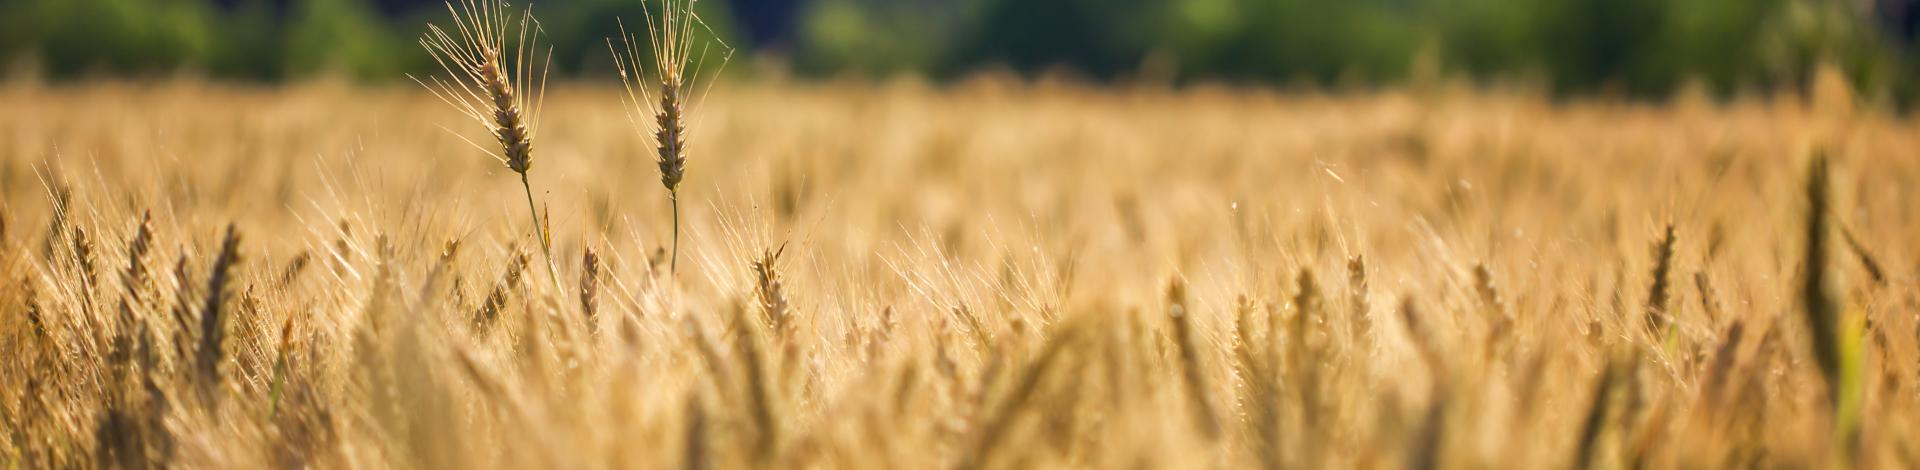 golden-wheat-wheat-field